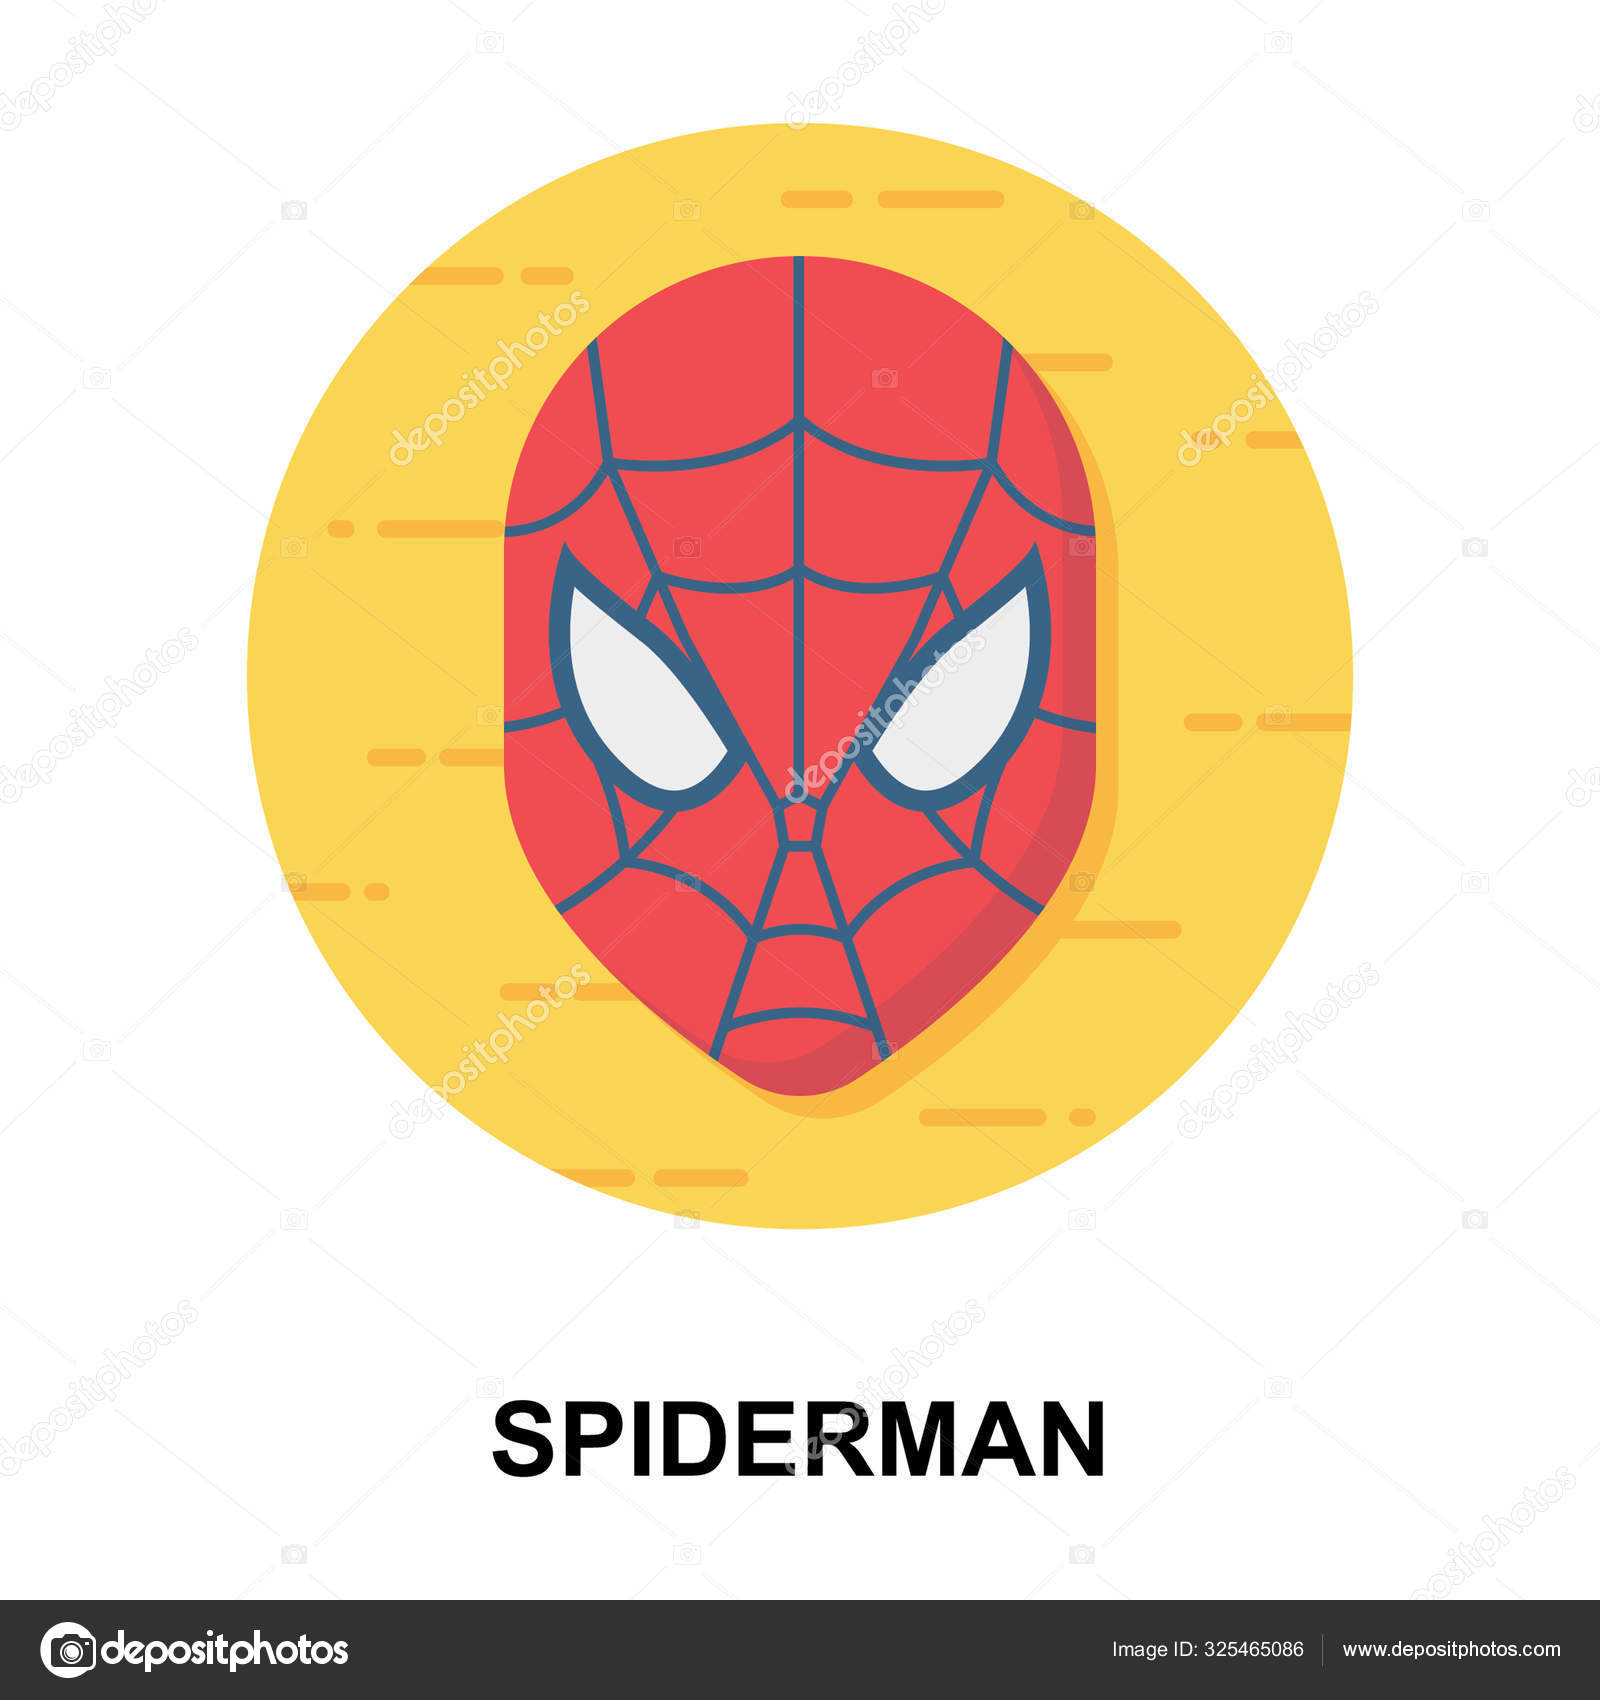 Spiderman Vector Art Stock Images | Depositphotos